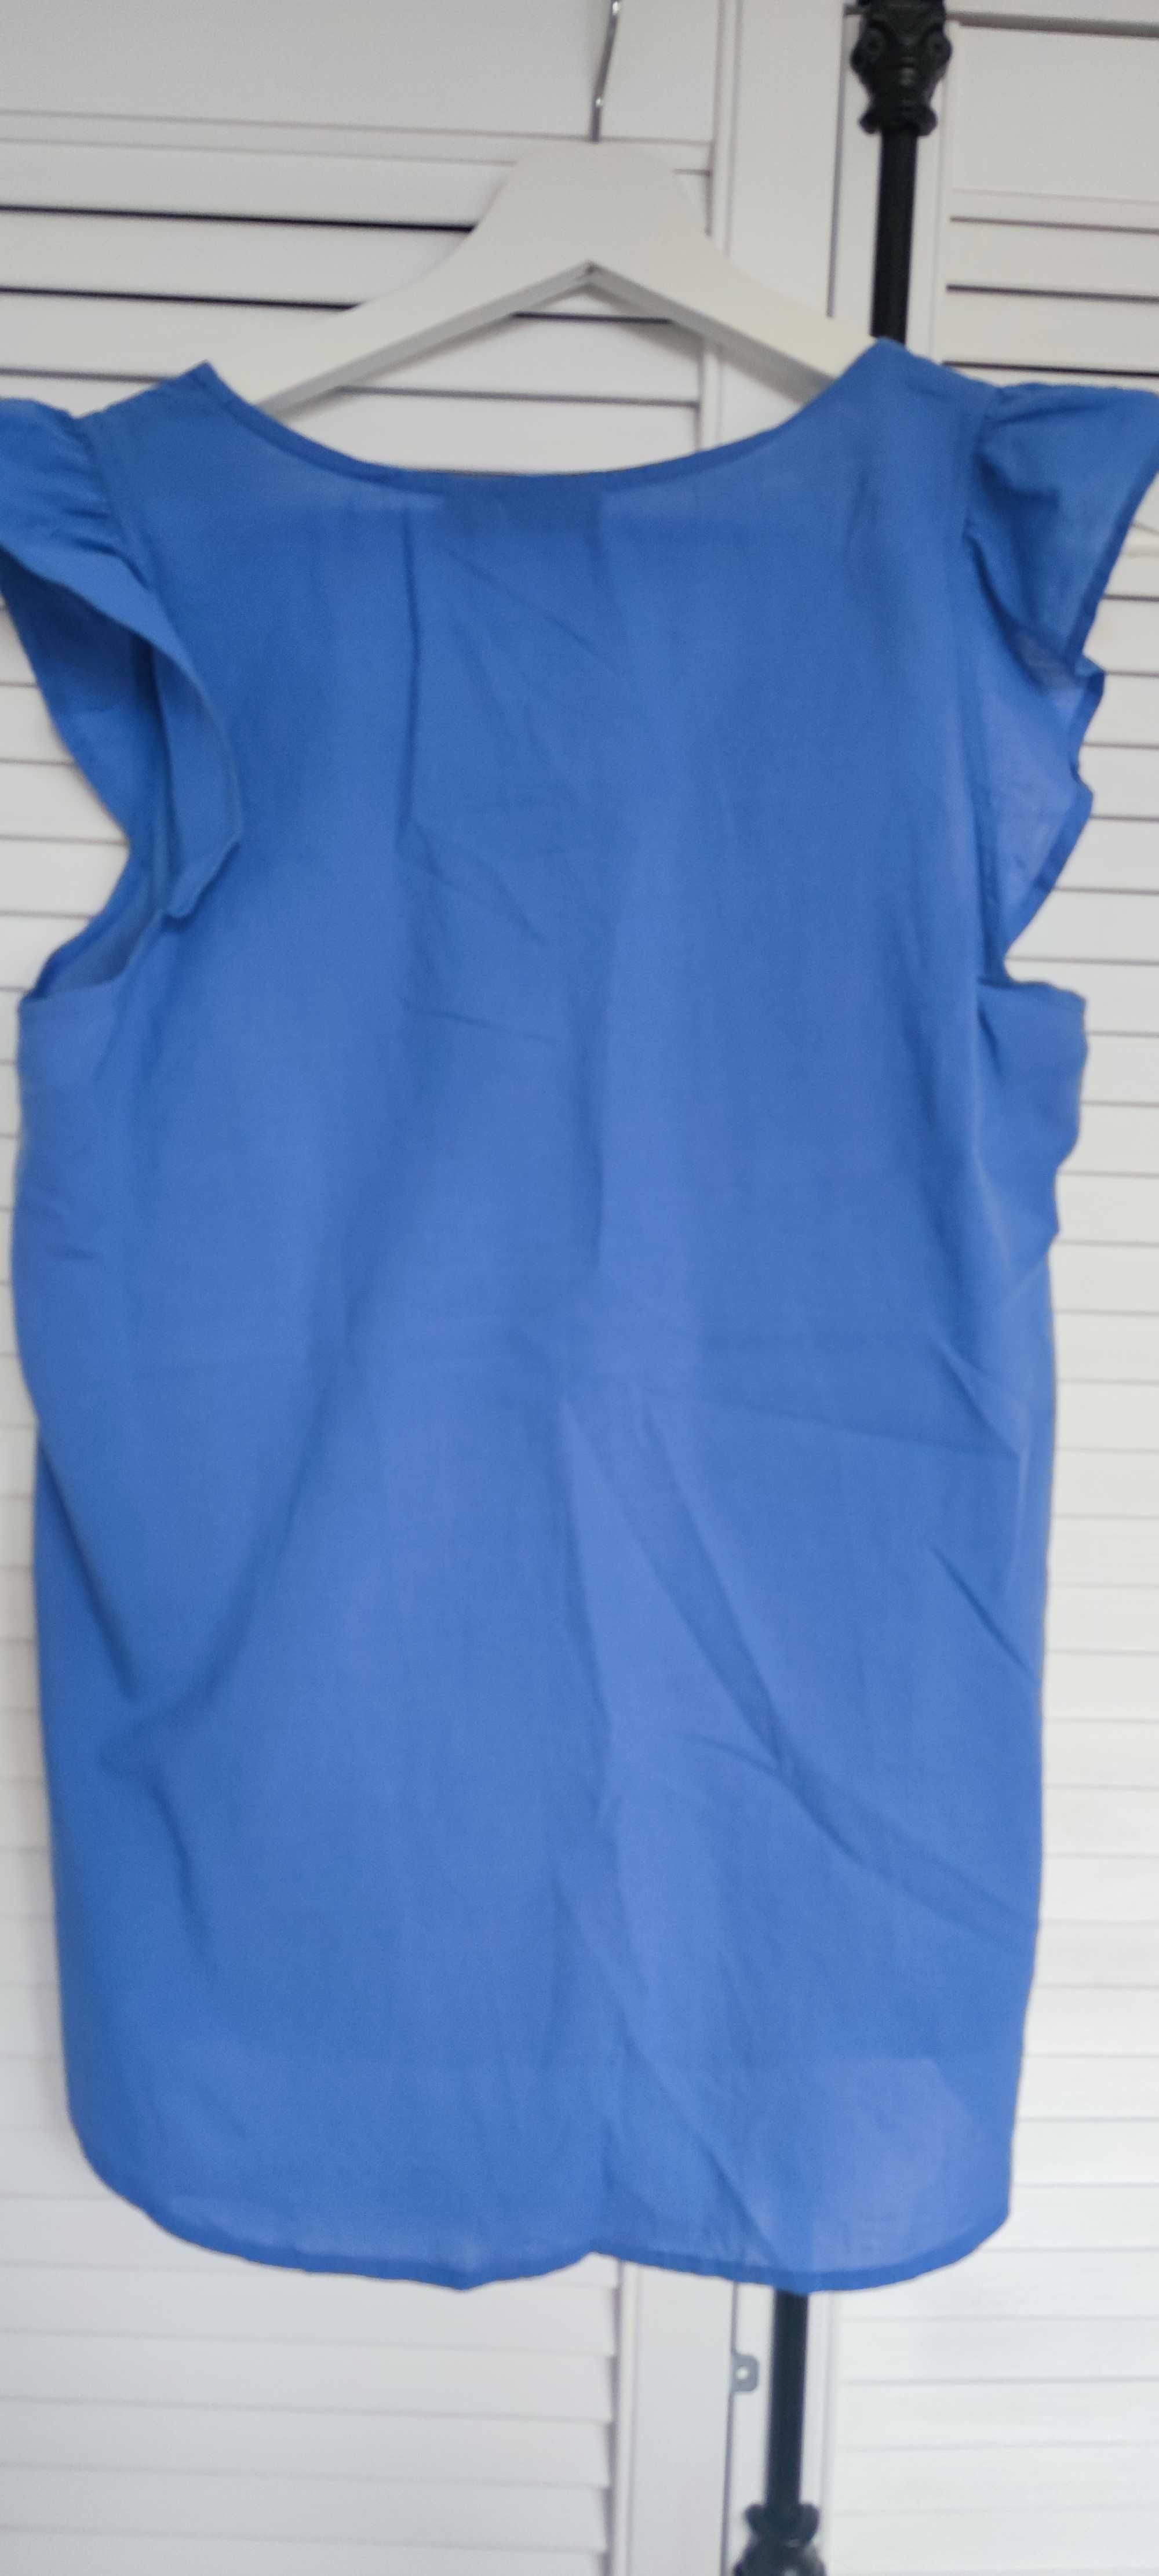 Bluzka niebieska bawełna - Esmara r. 40